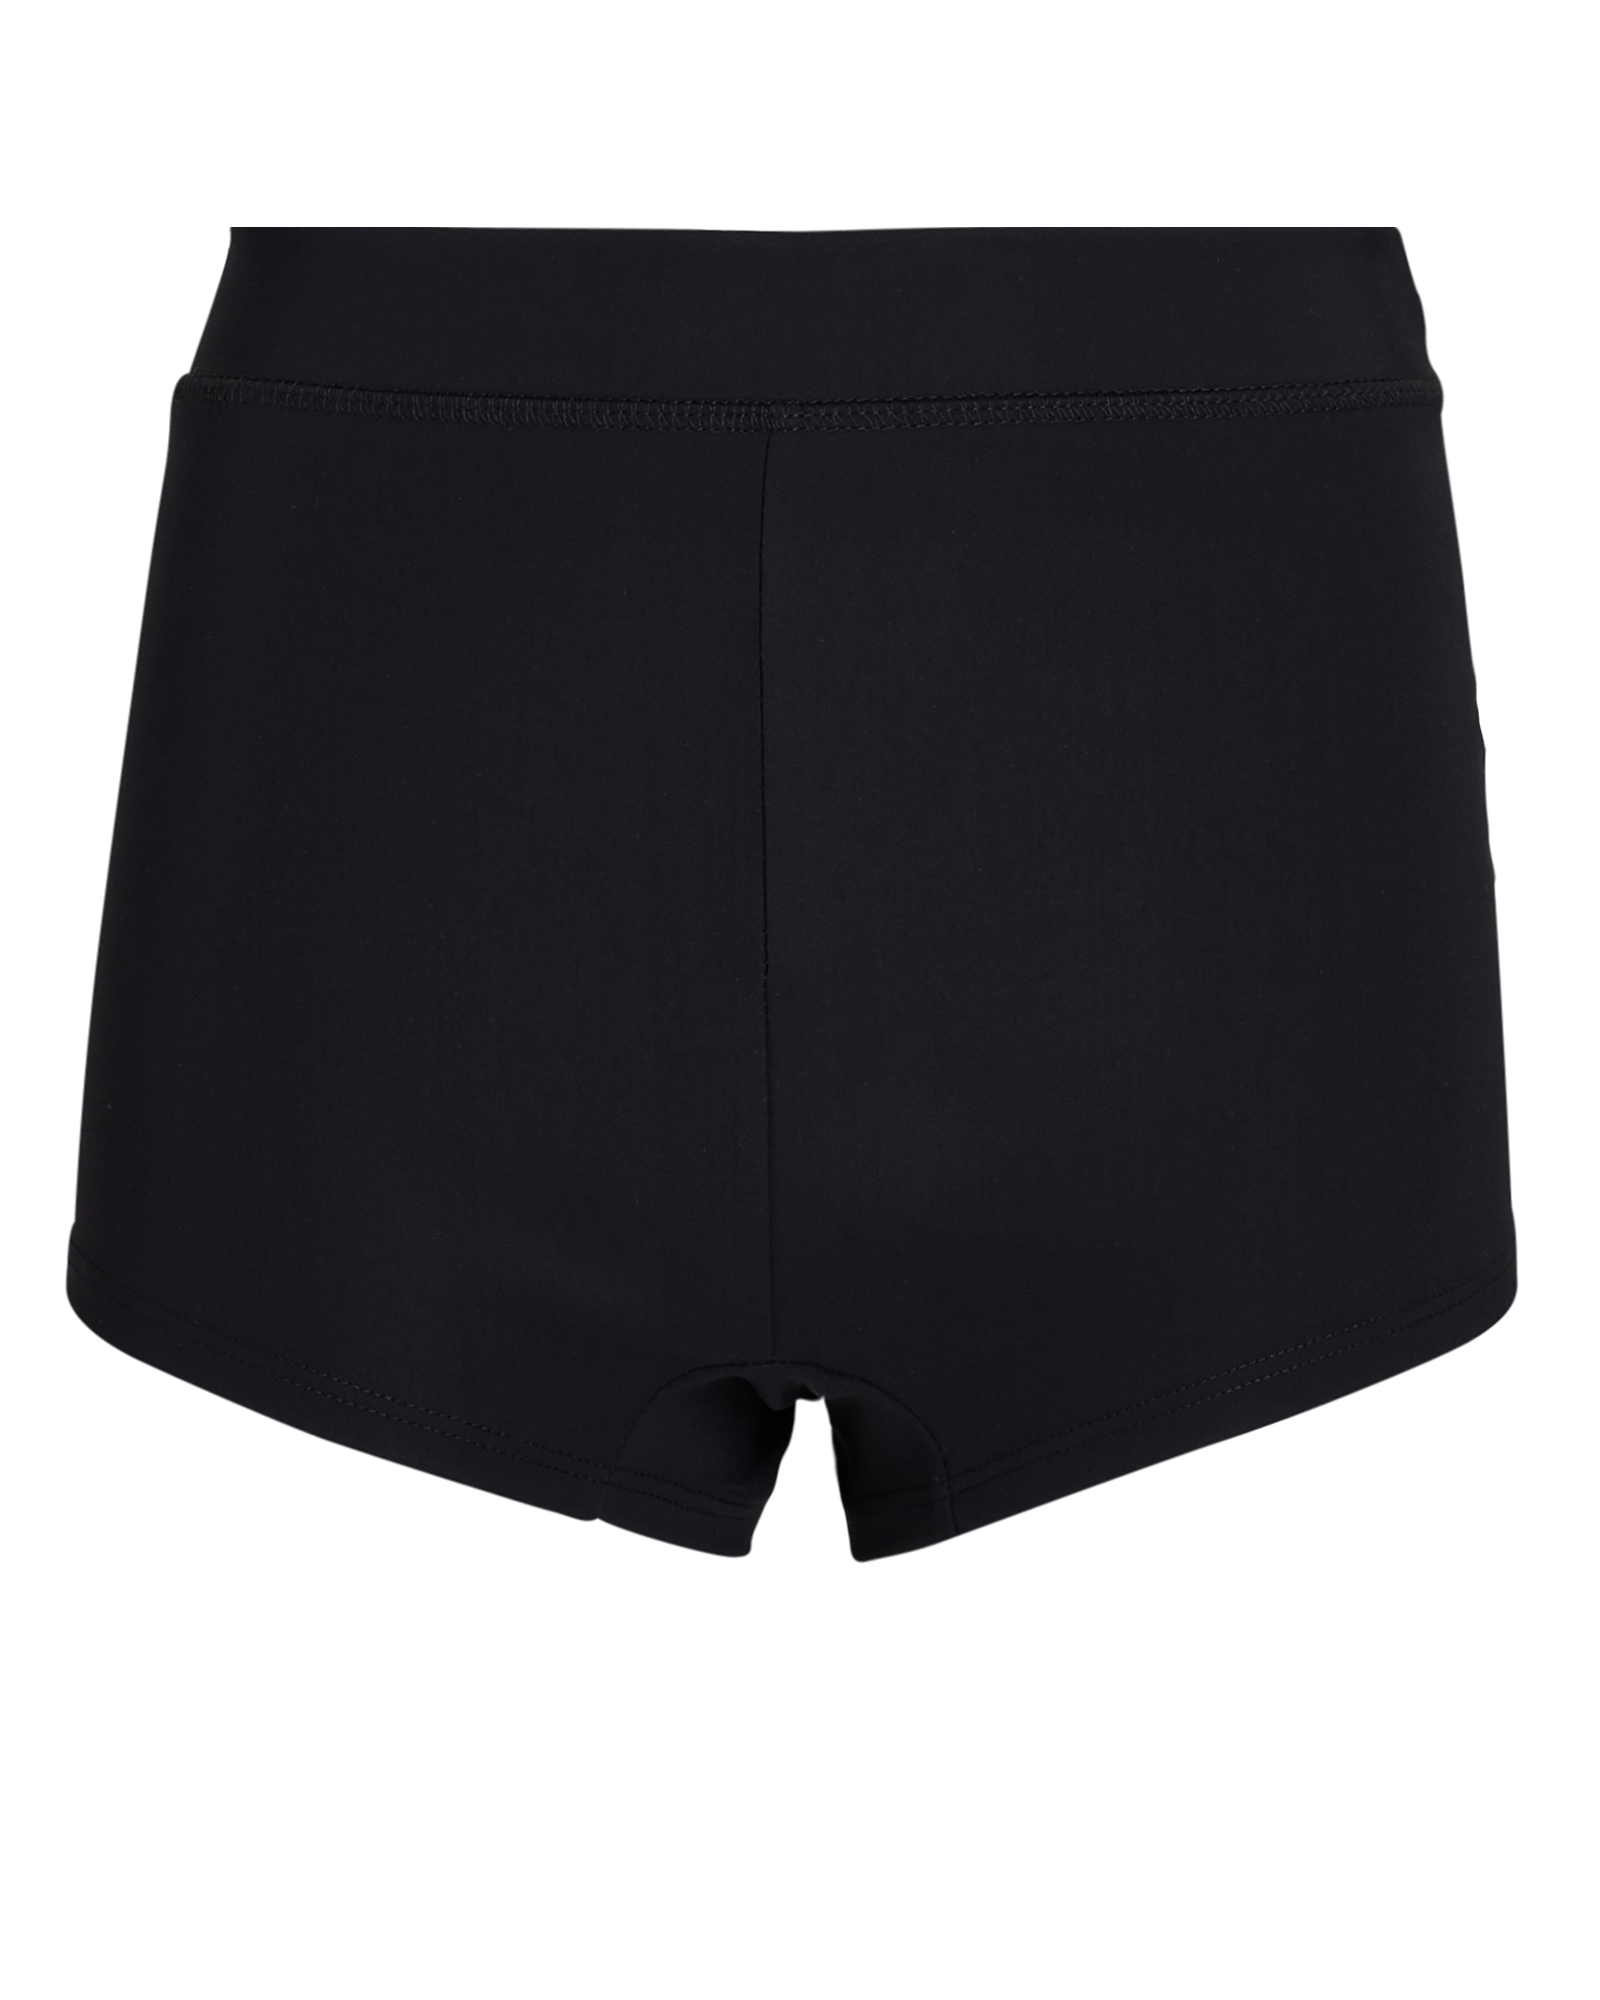 Ciao Lucia Capri High-Waist Shorts | INTERMIX®